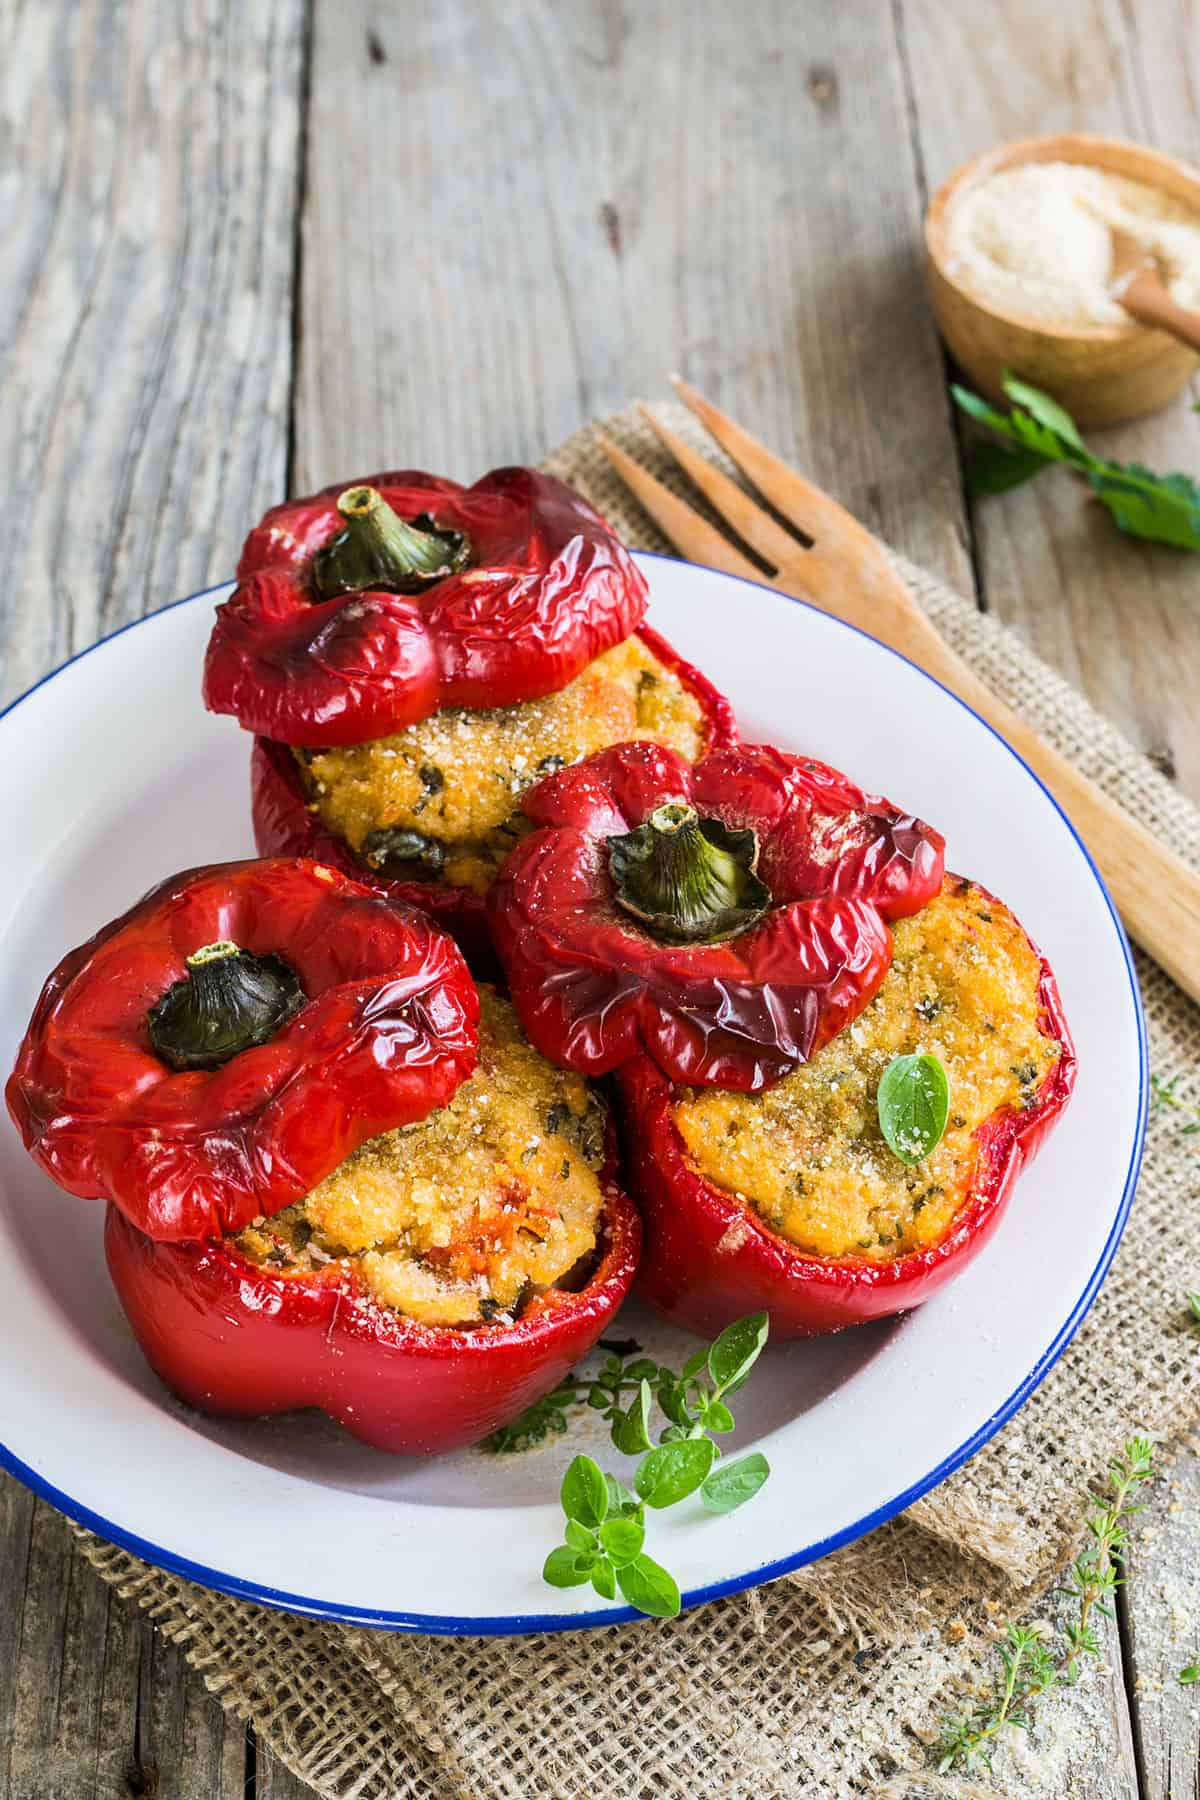 Vegetarian Italian stuffed peppers on a plate.